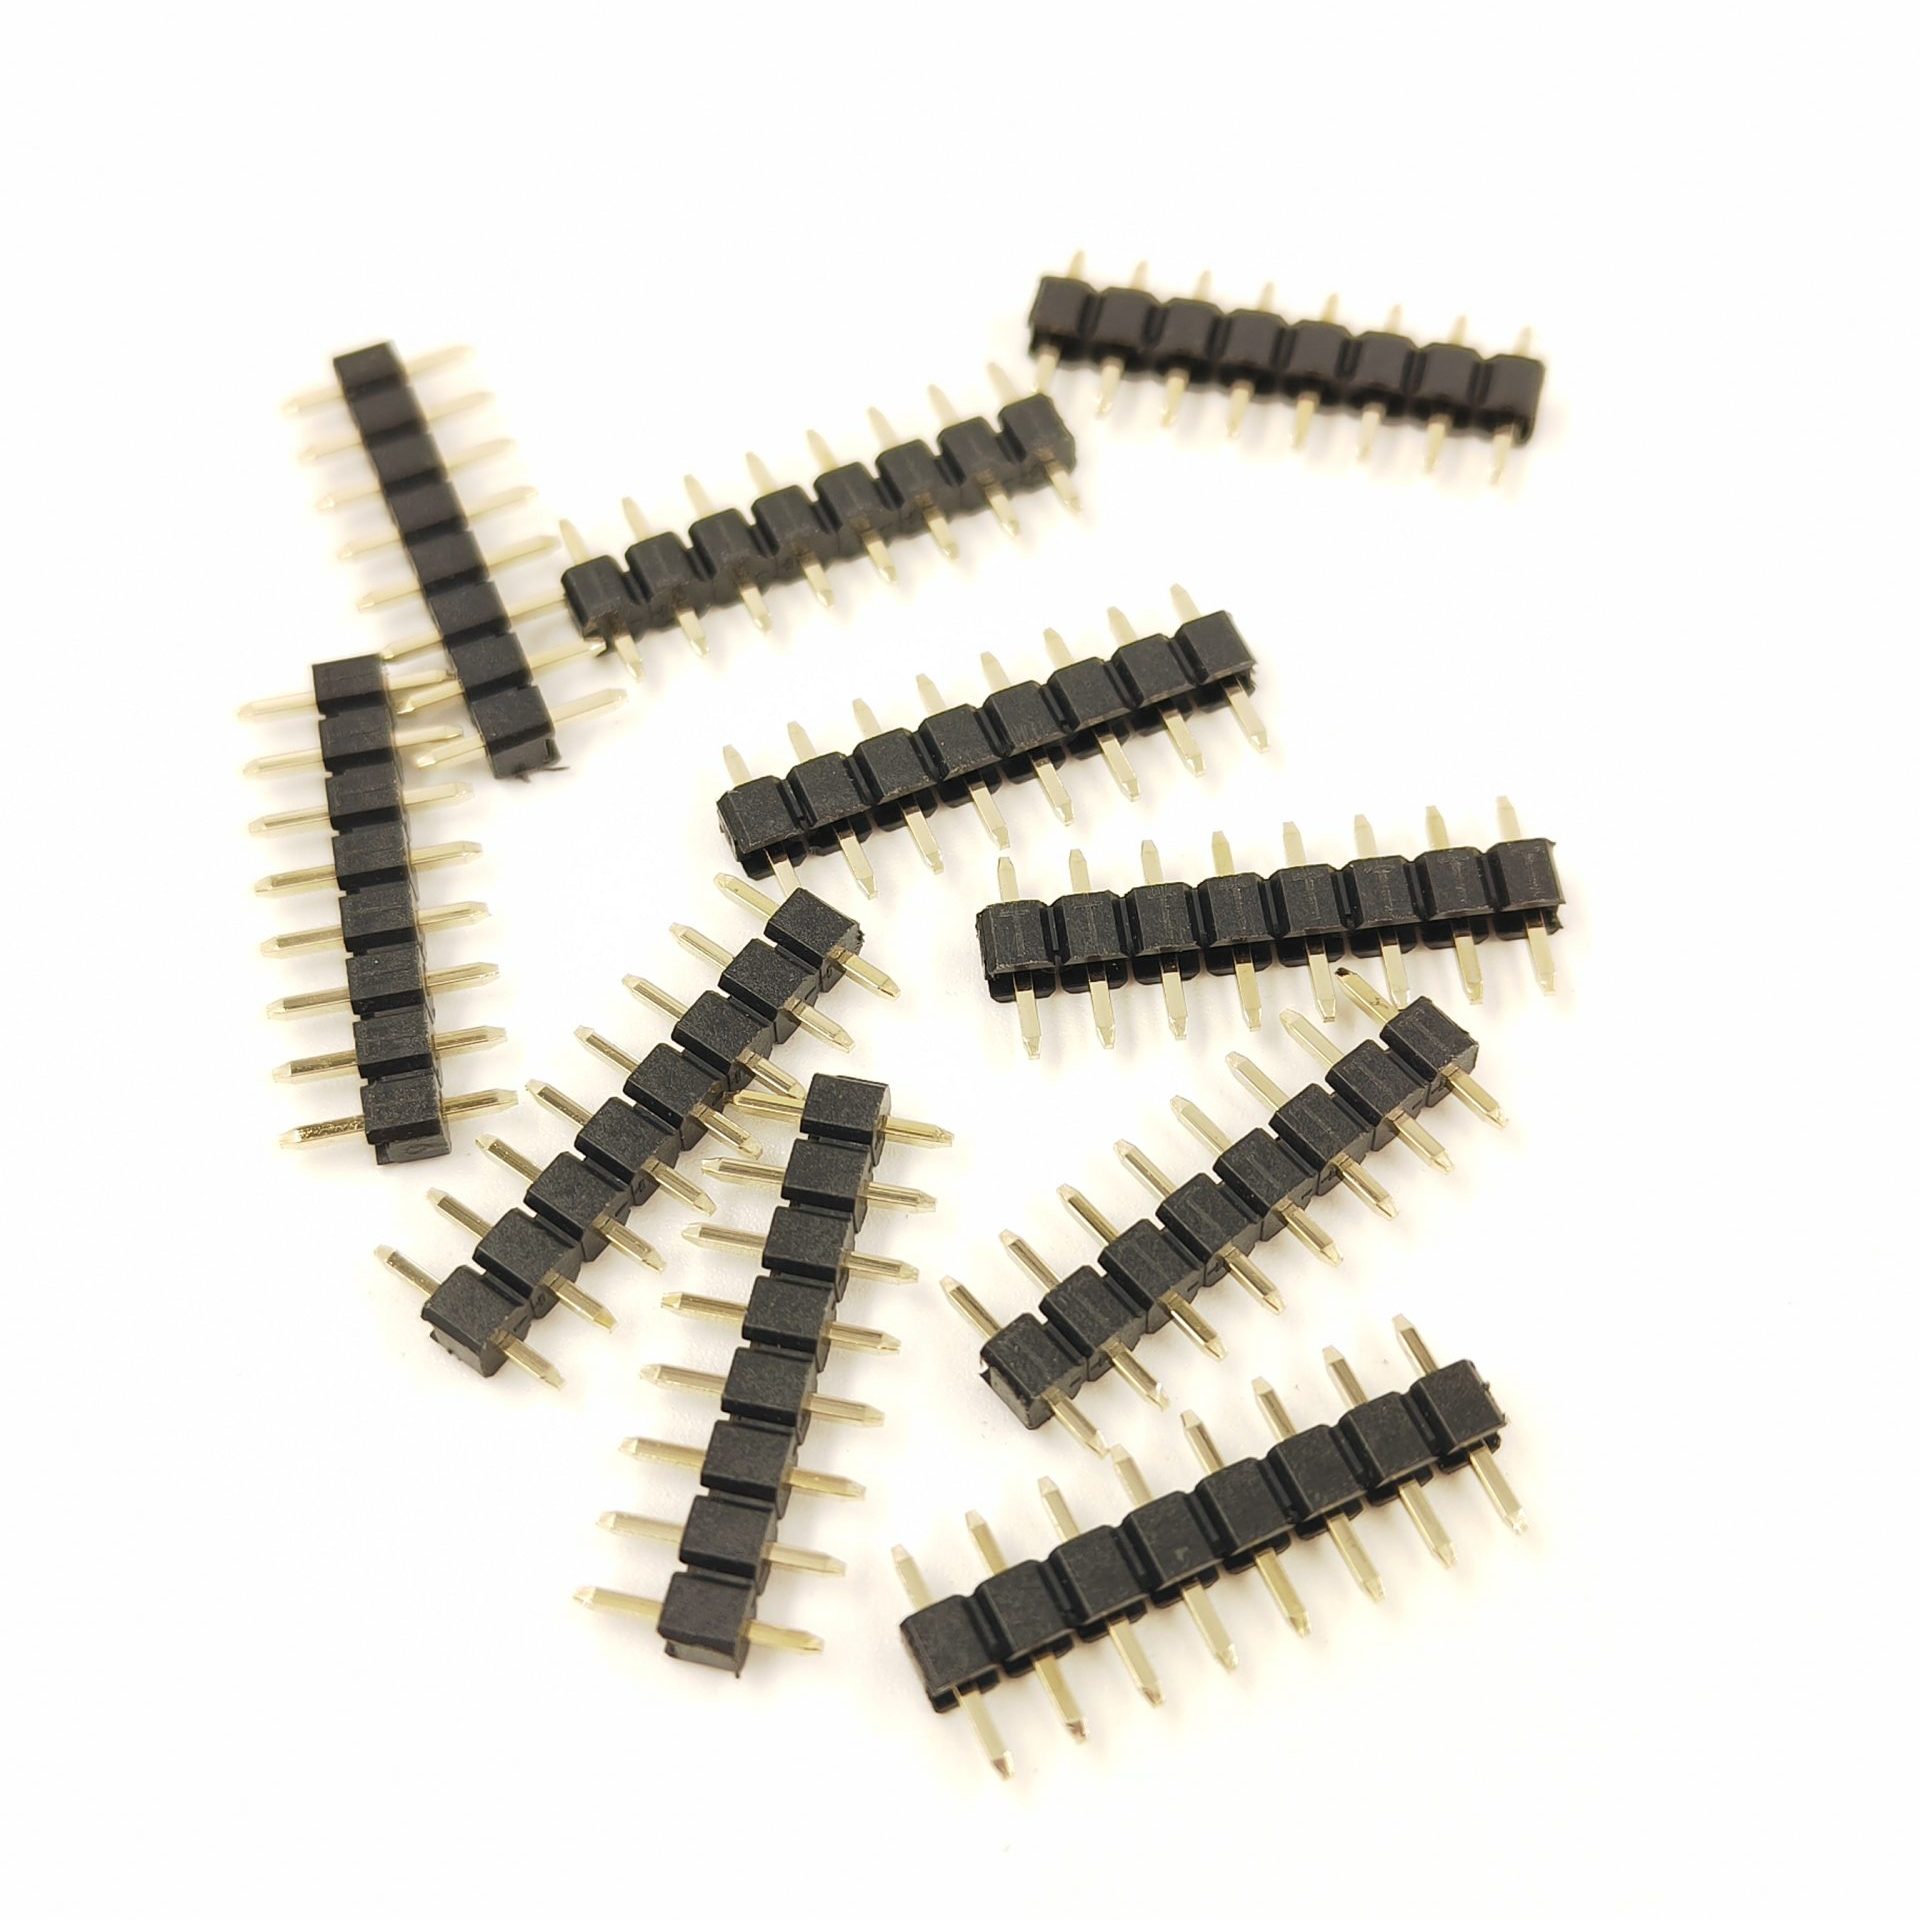 2.54mm pitch 8pin header single row contactor strip 800length pin header